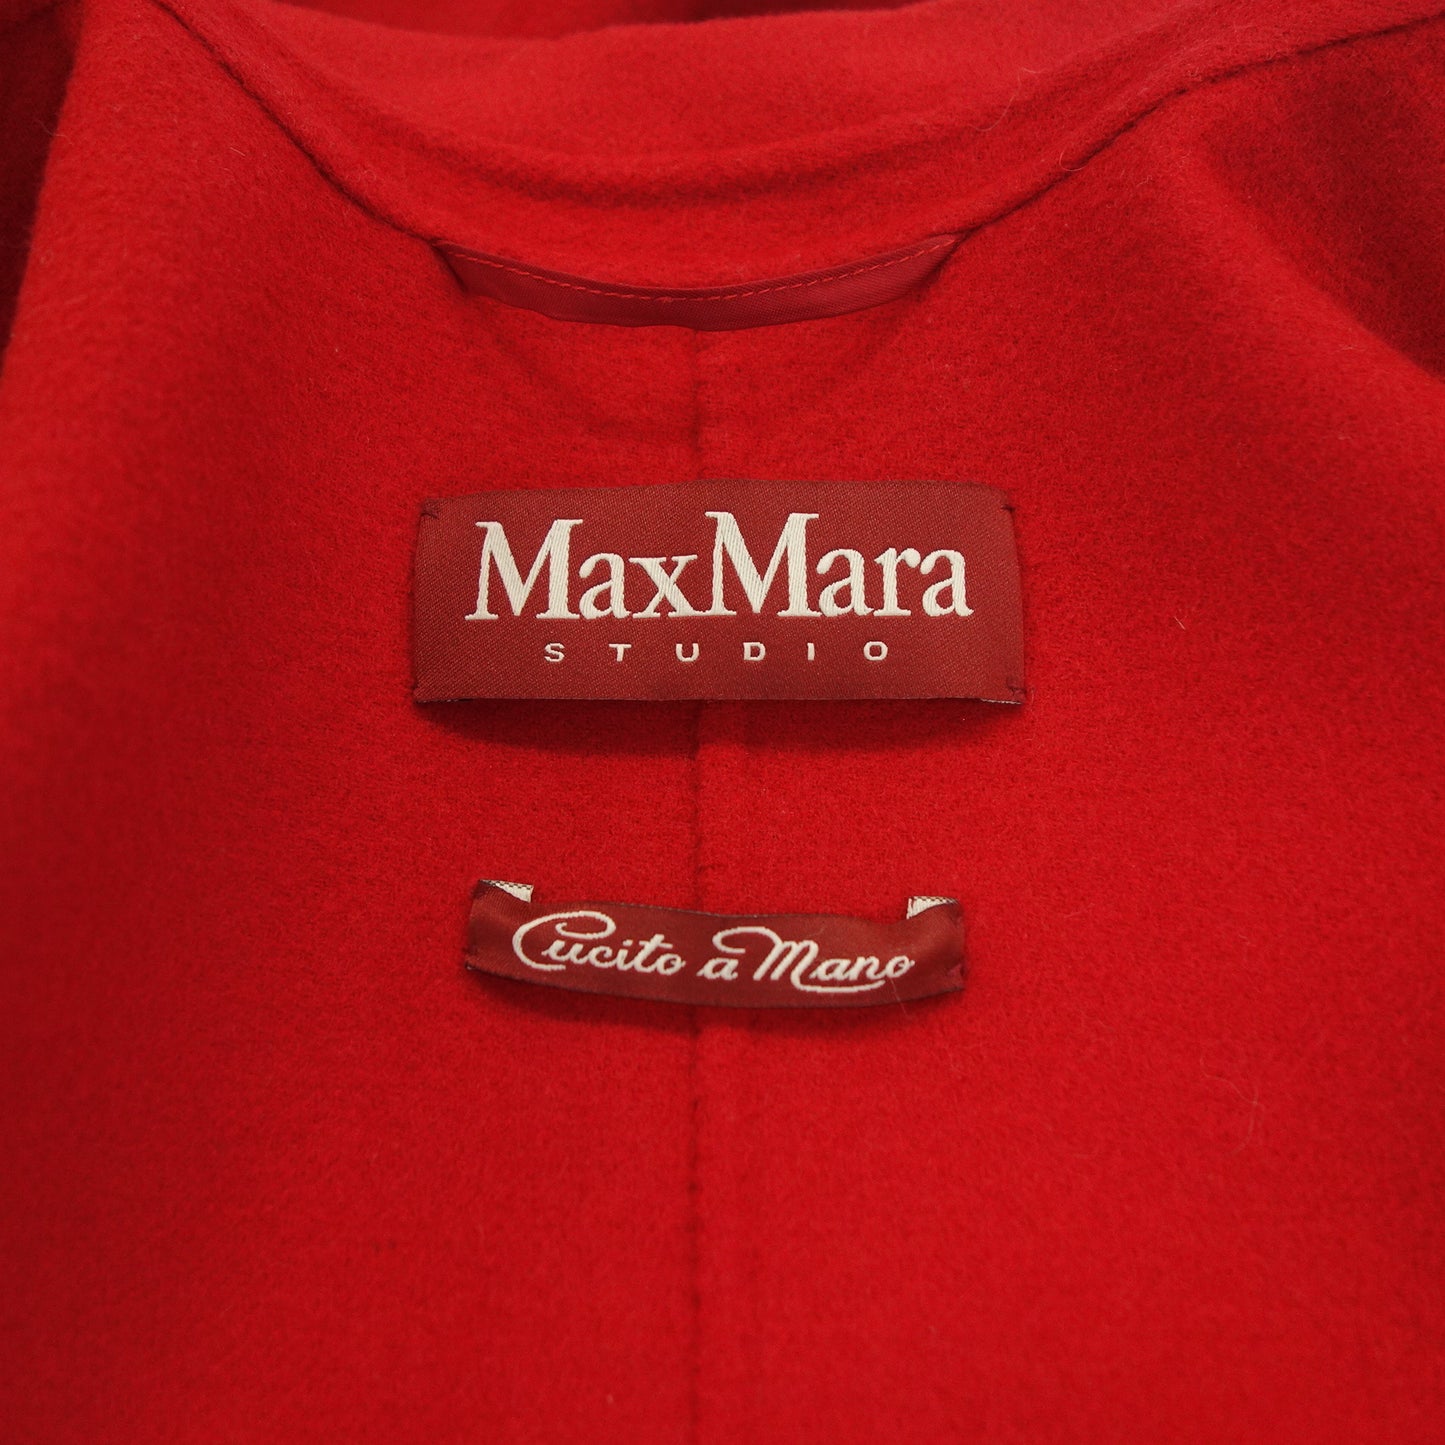 Max Mara Studio 束带大衣长款 Cucito Amano 女式红色 USA2 MaxMara [AFA20] [二手] 